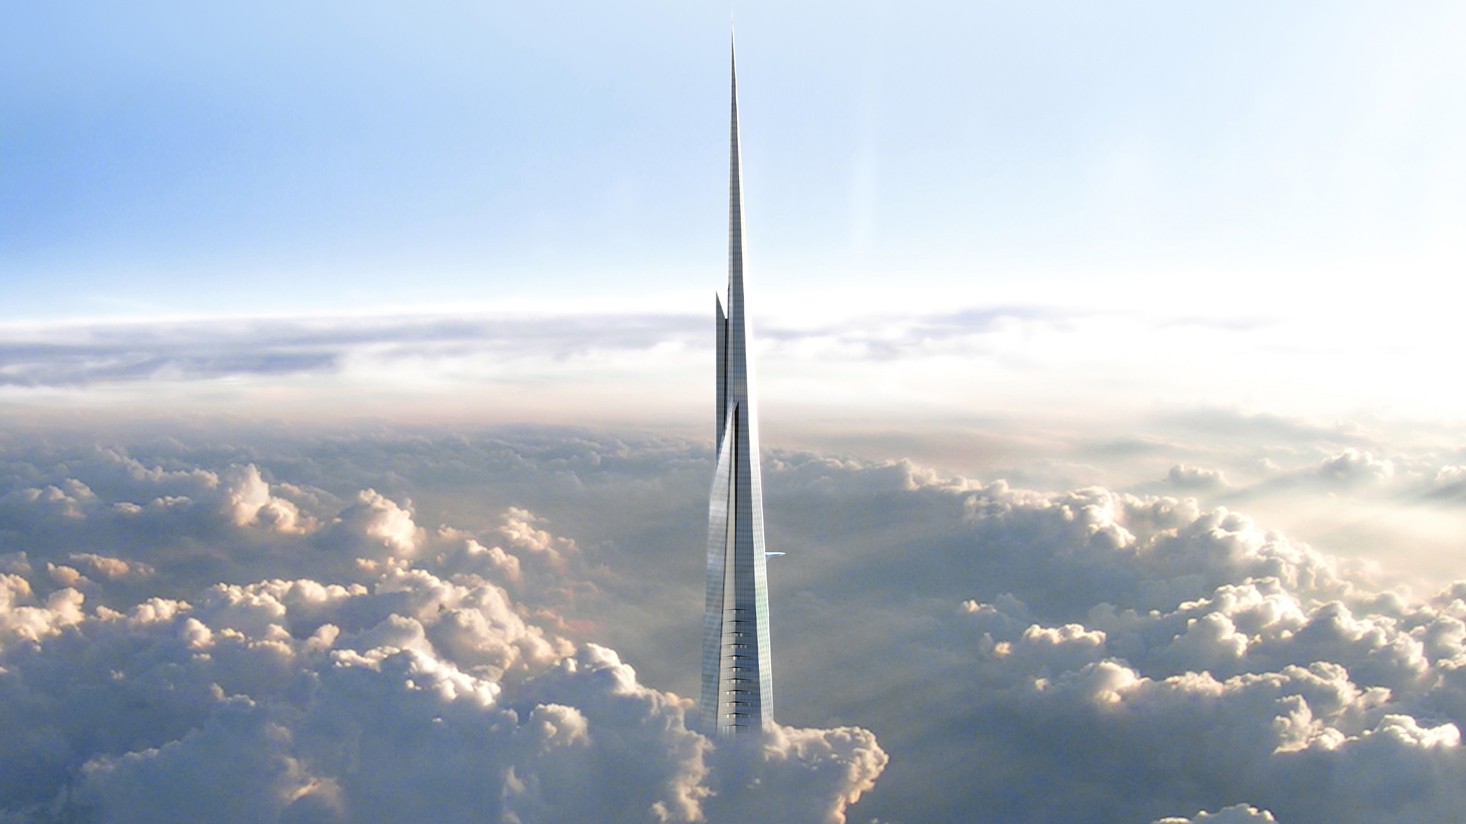 Tα 5 ψηλότερα κτίρια στον κόσμο και αυτό που θα αλλάξει τη σειρά κατάταξης